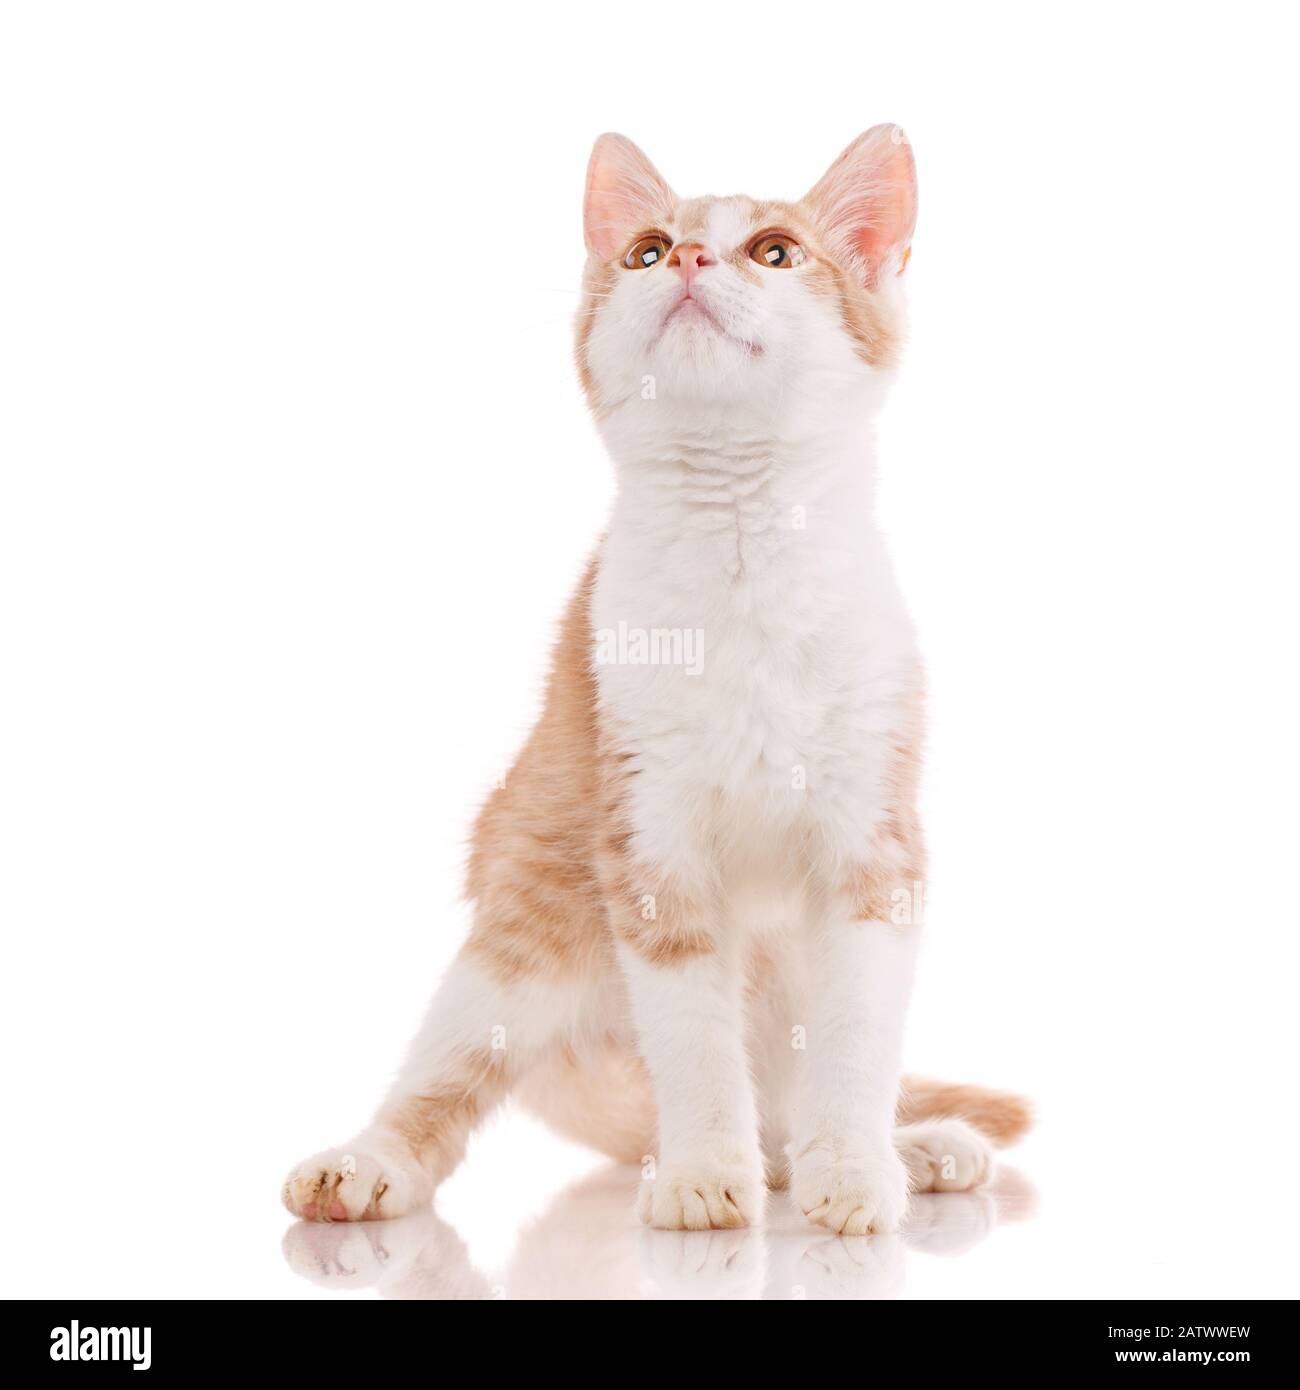 Red kitten. Sitting cat. Kitten on a white background. Stock Photo